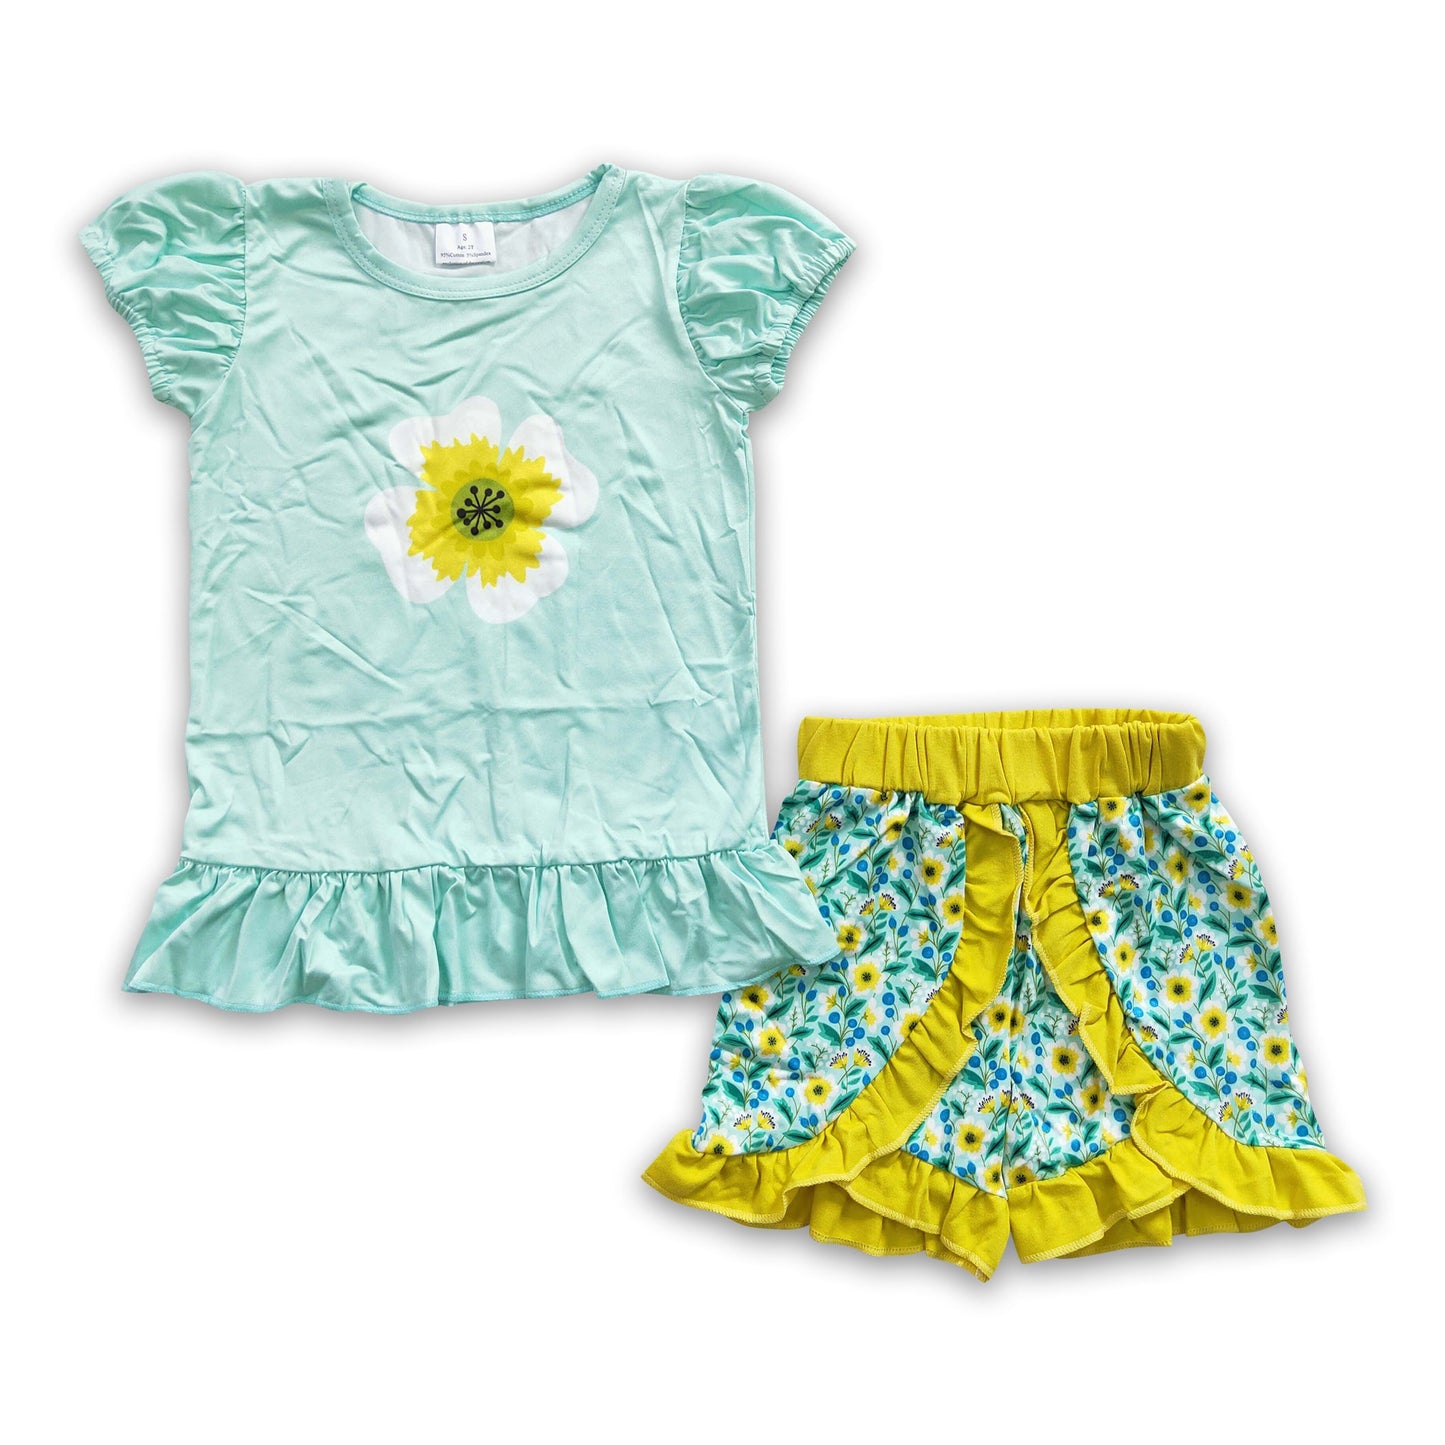 Mint floral shirt match shorts girls clothing set